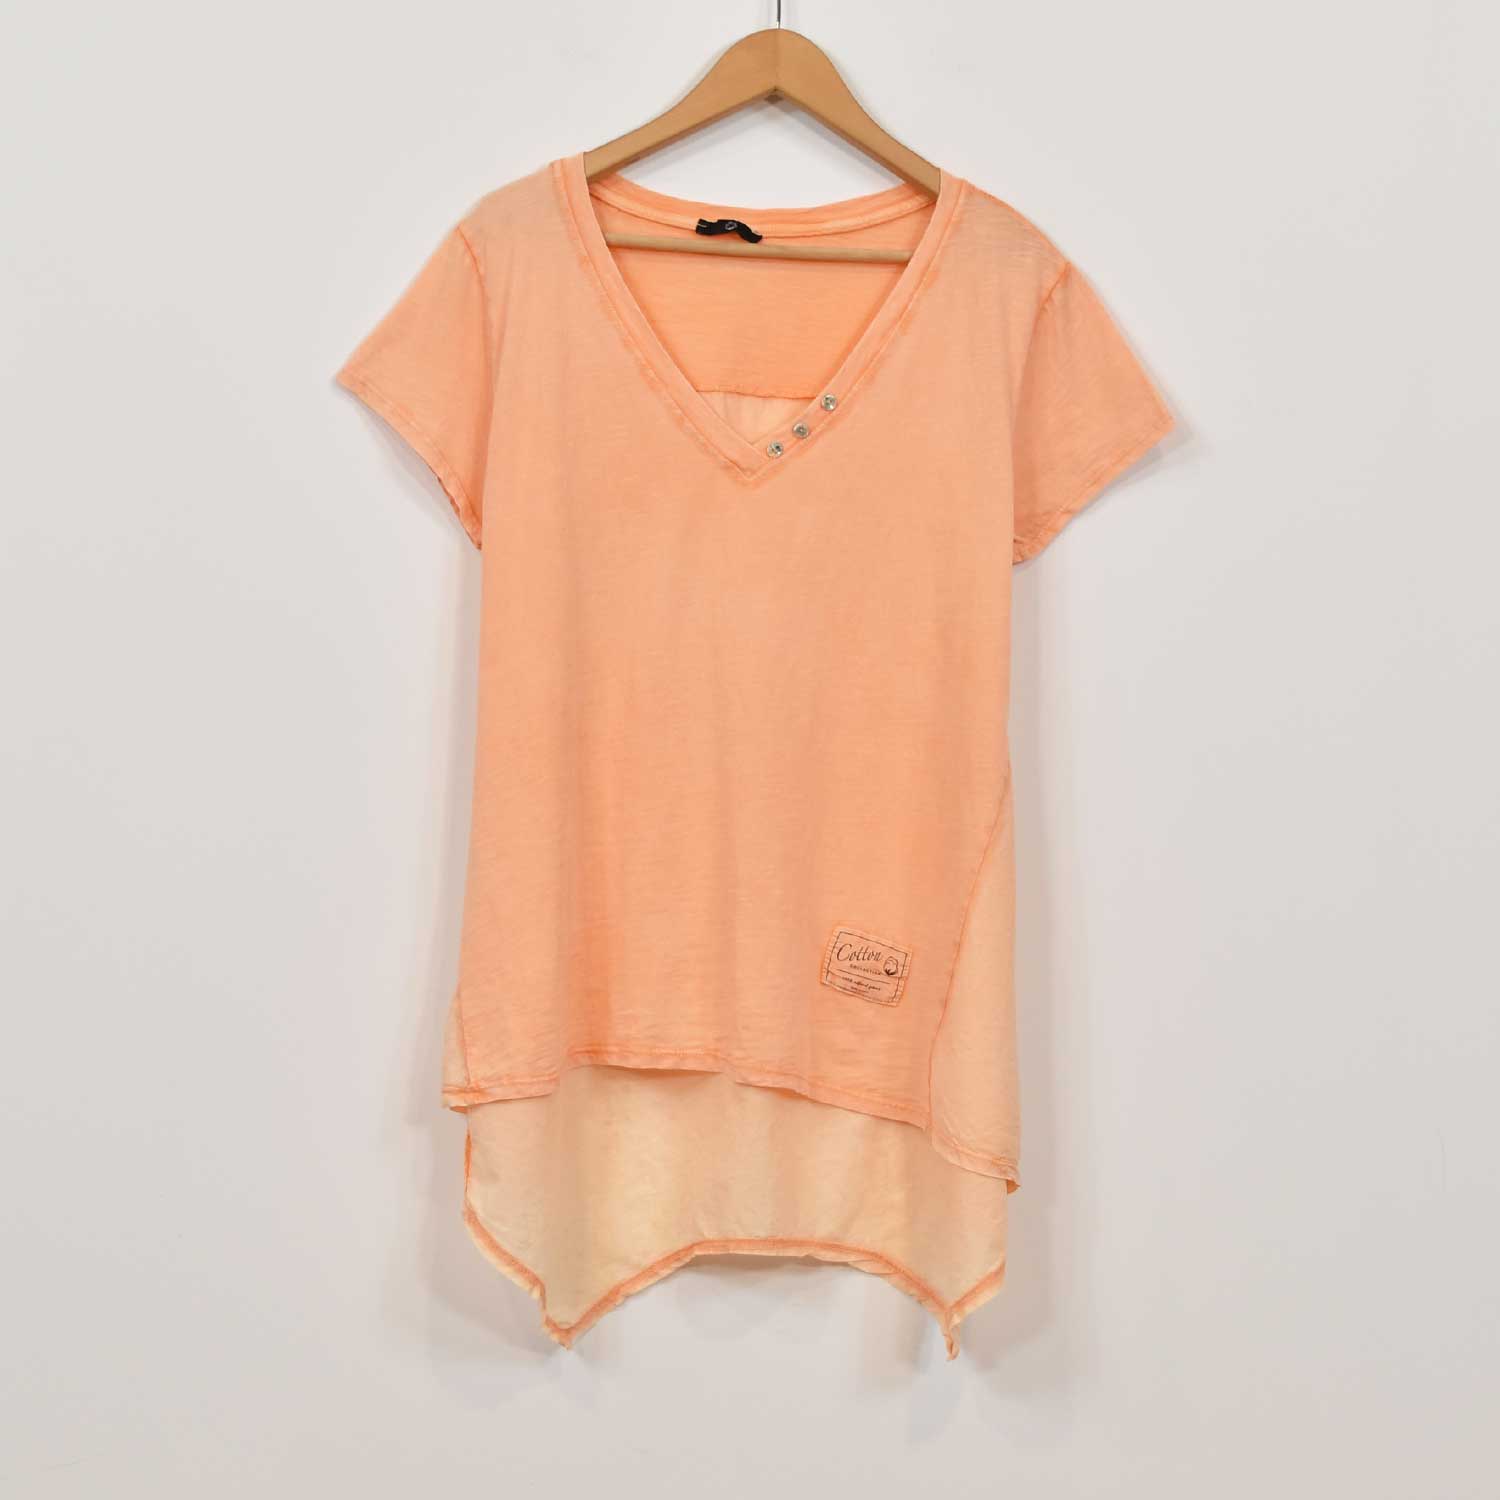 Orange peaks t-shirt